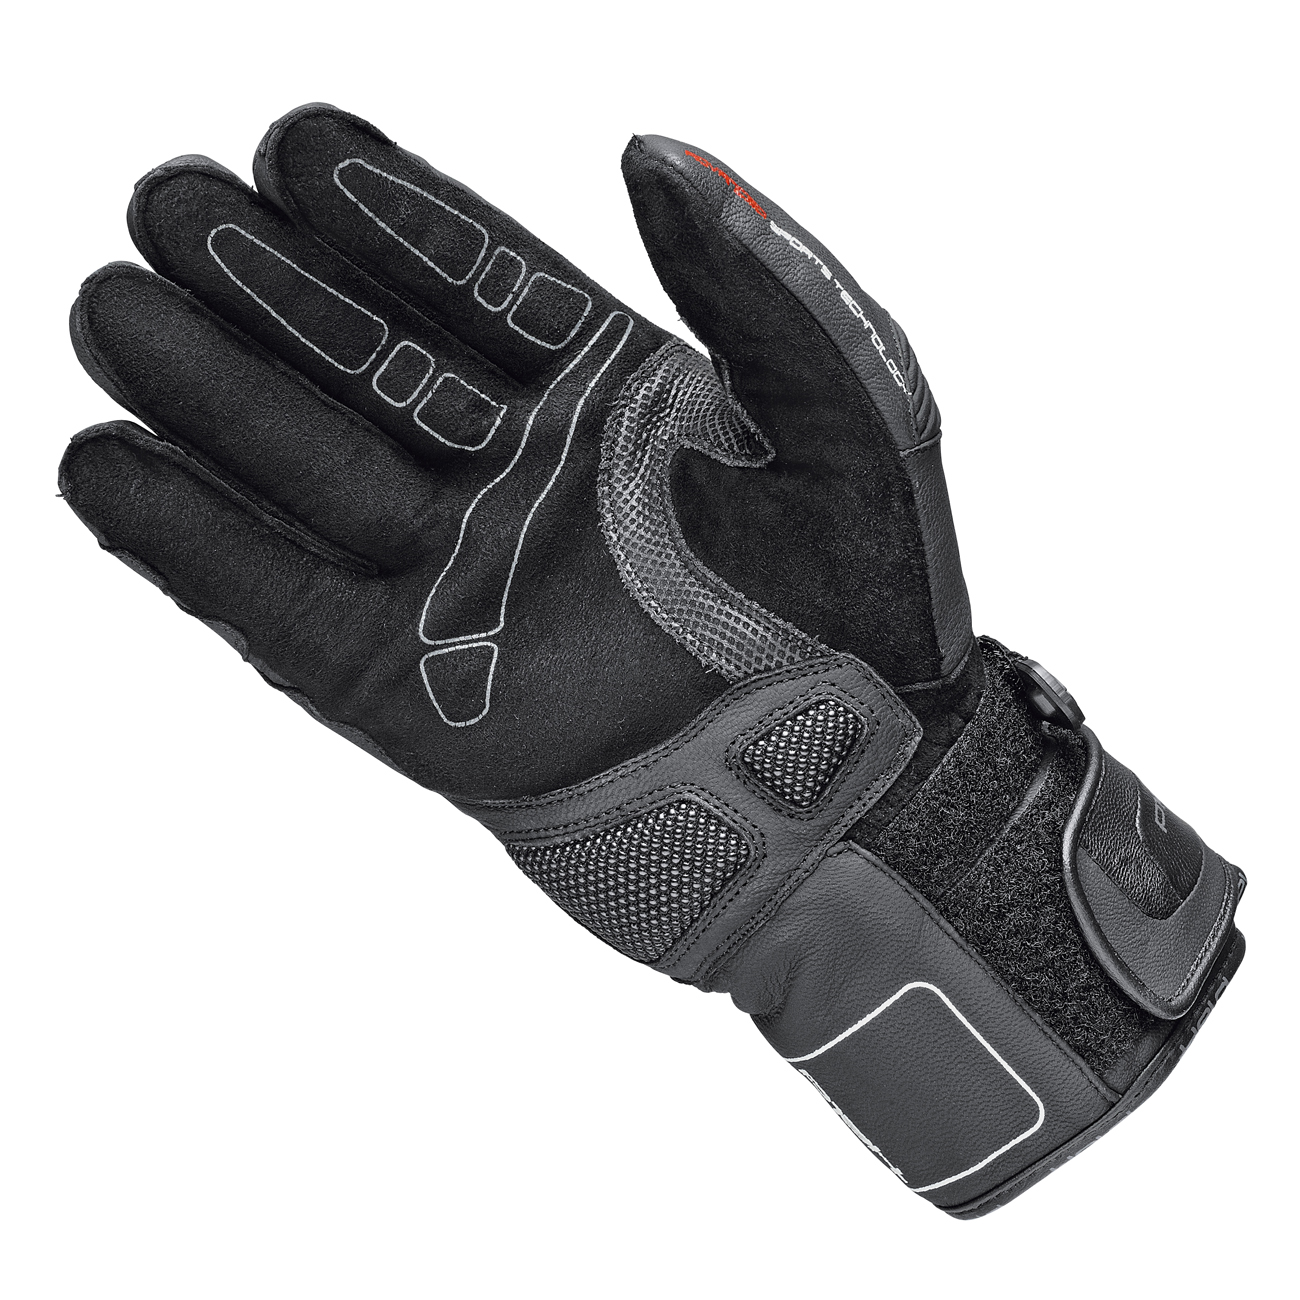 Secret-Pro Touring glove